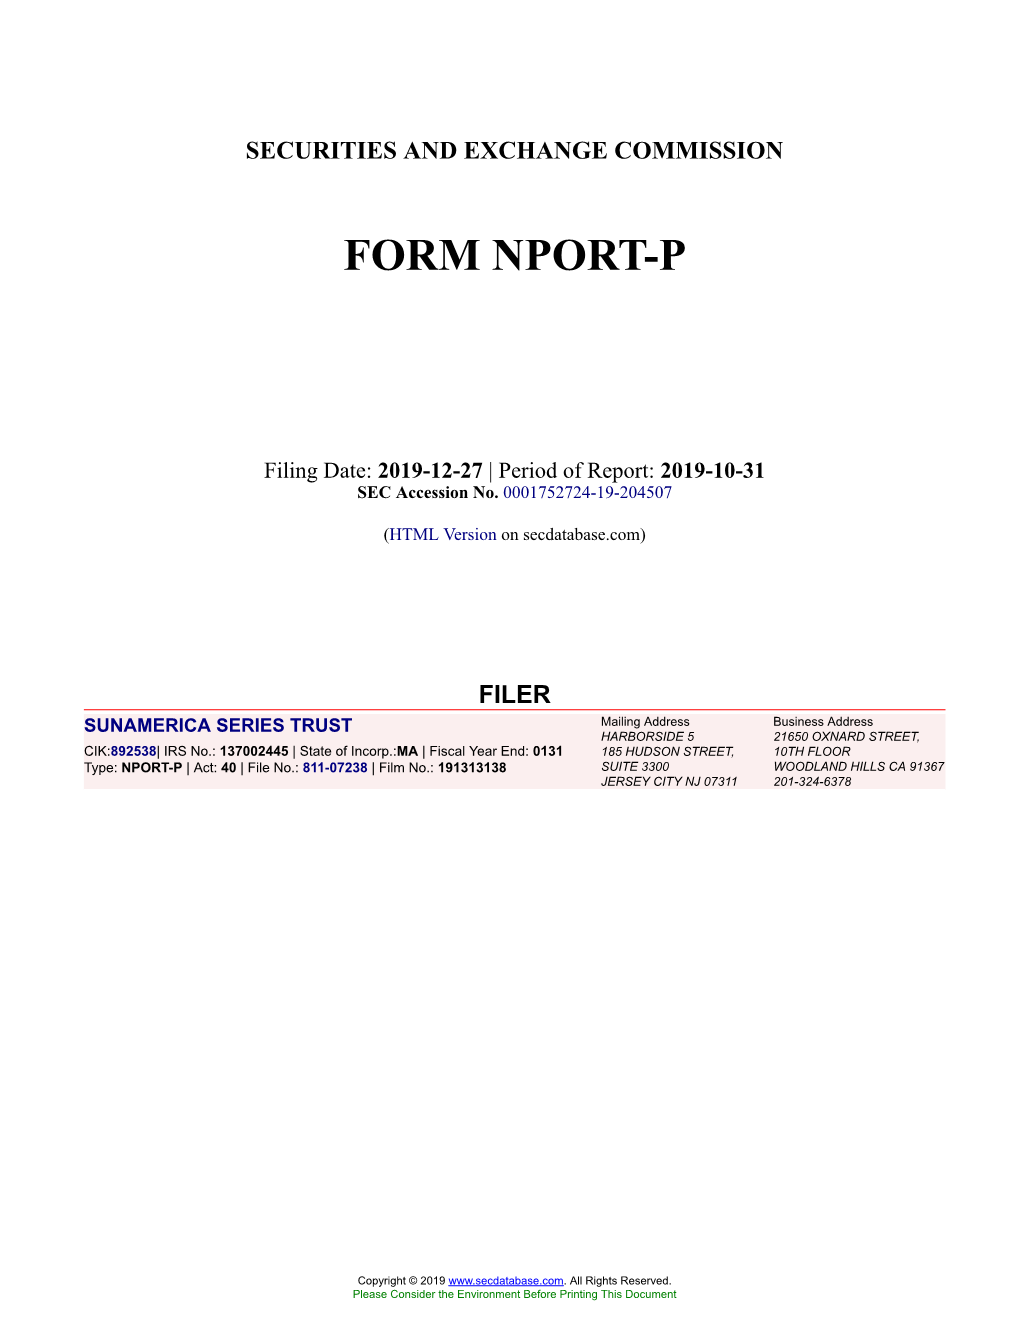 SUNAMERICA SERIES TRUST Form NPORT-P Filed 2019-12-27